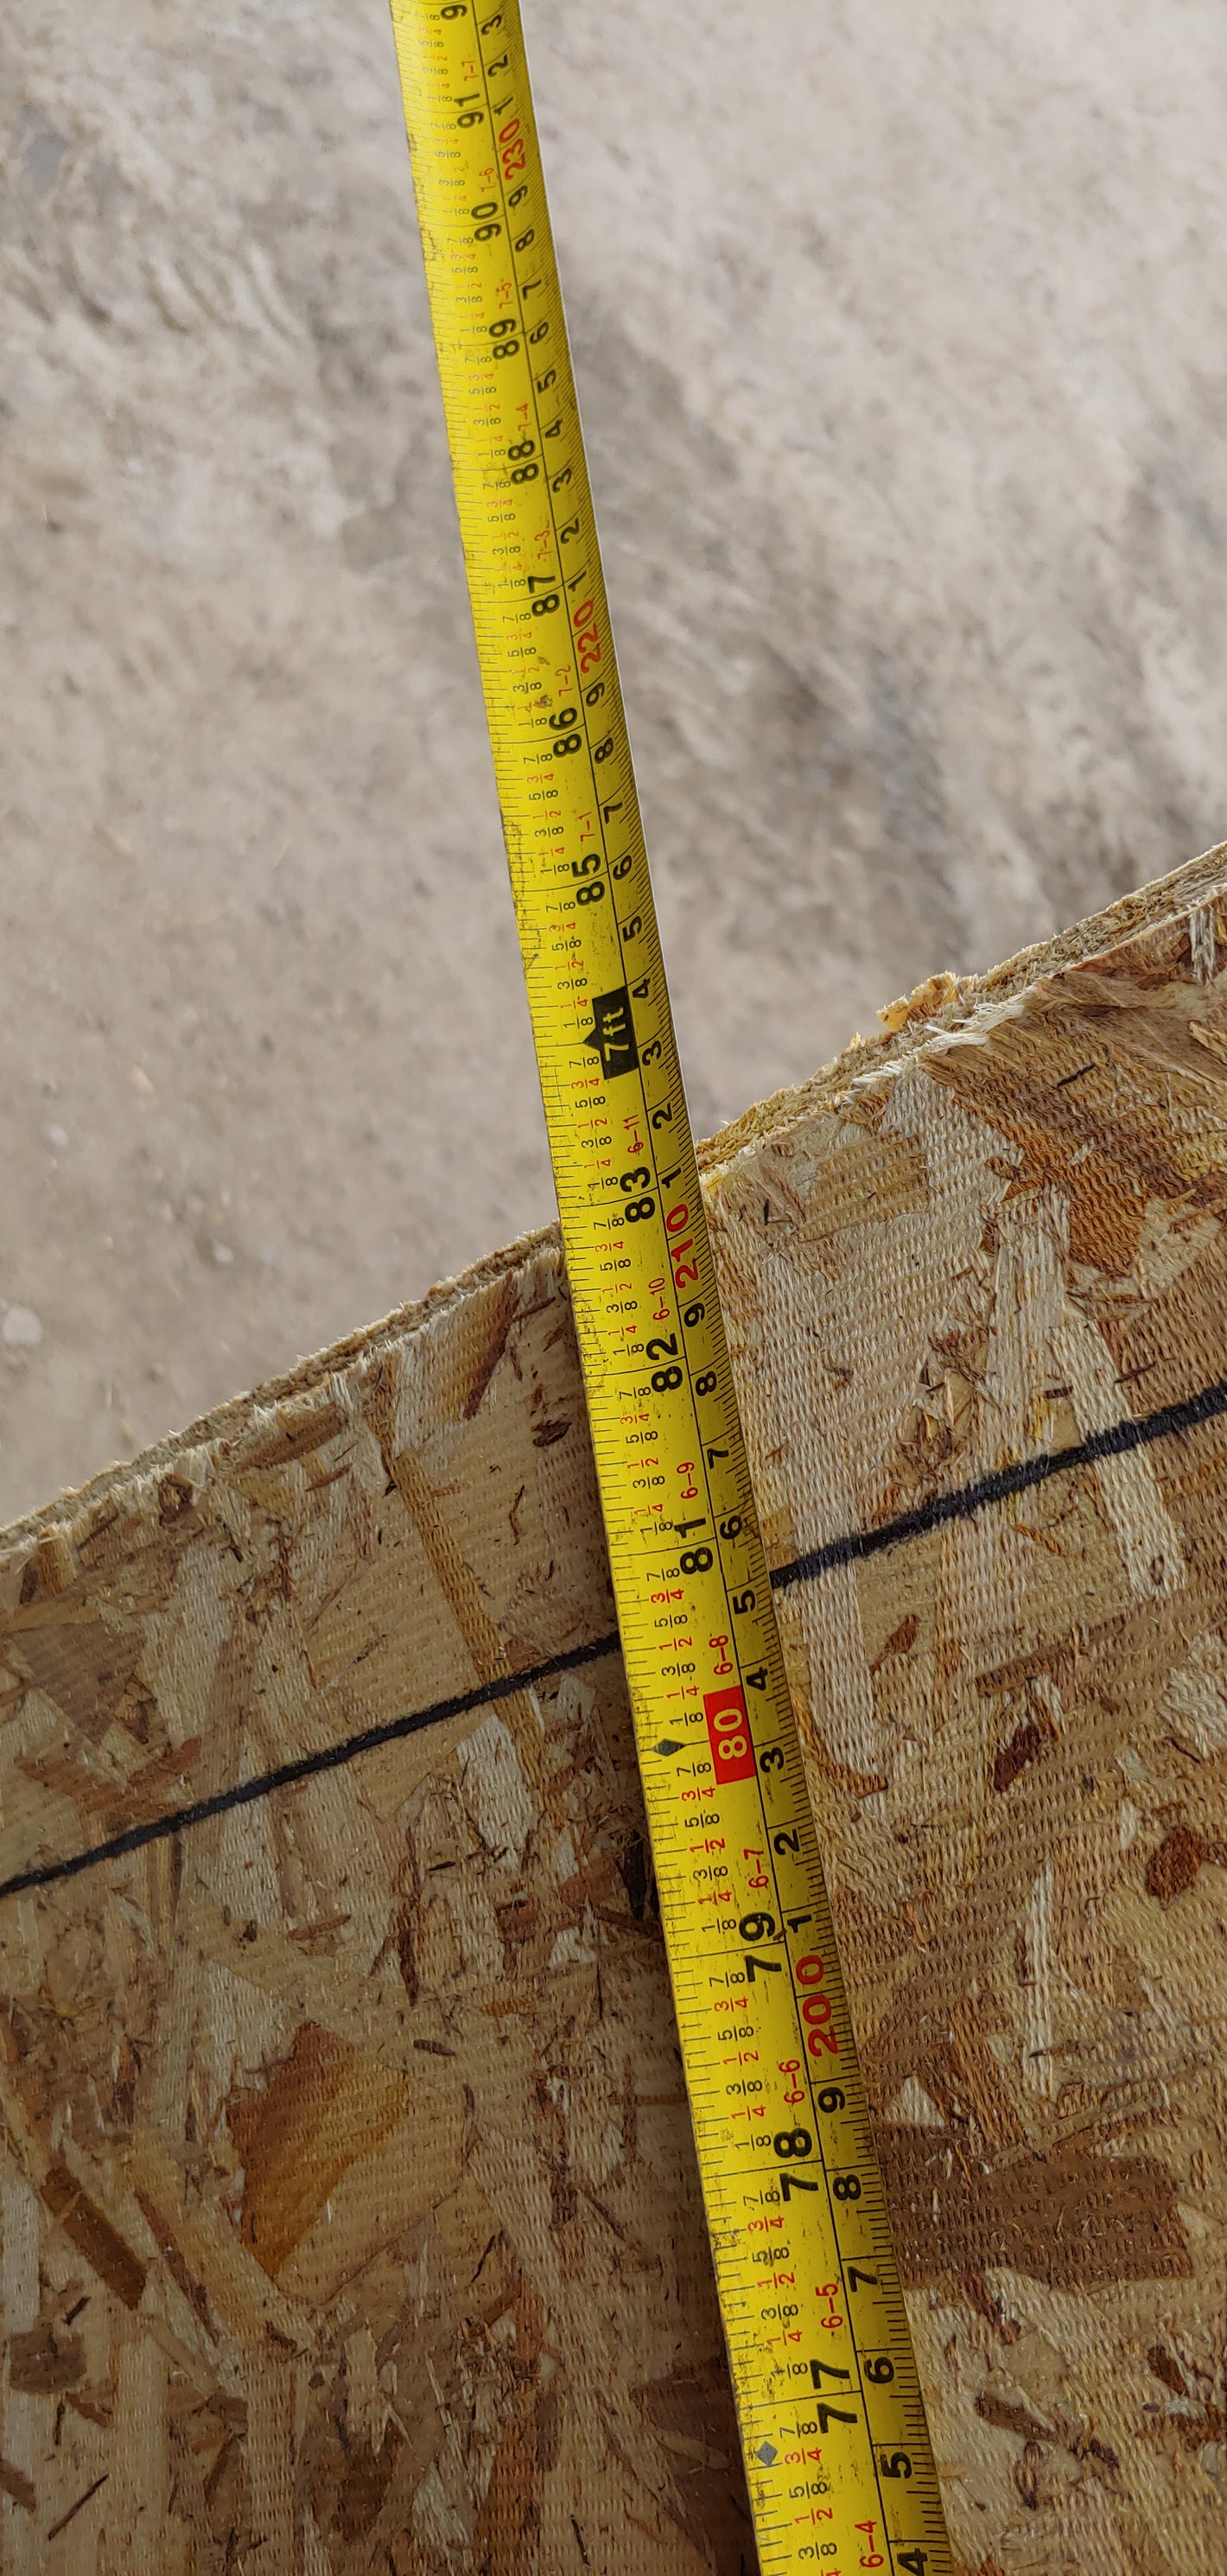 Building Materials & Lumber